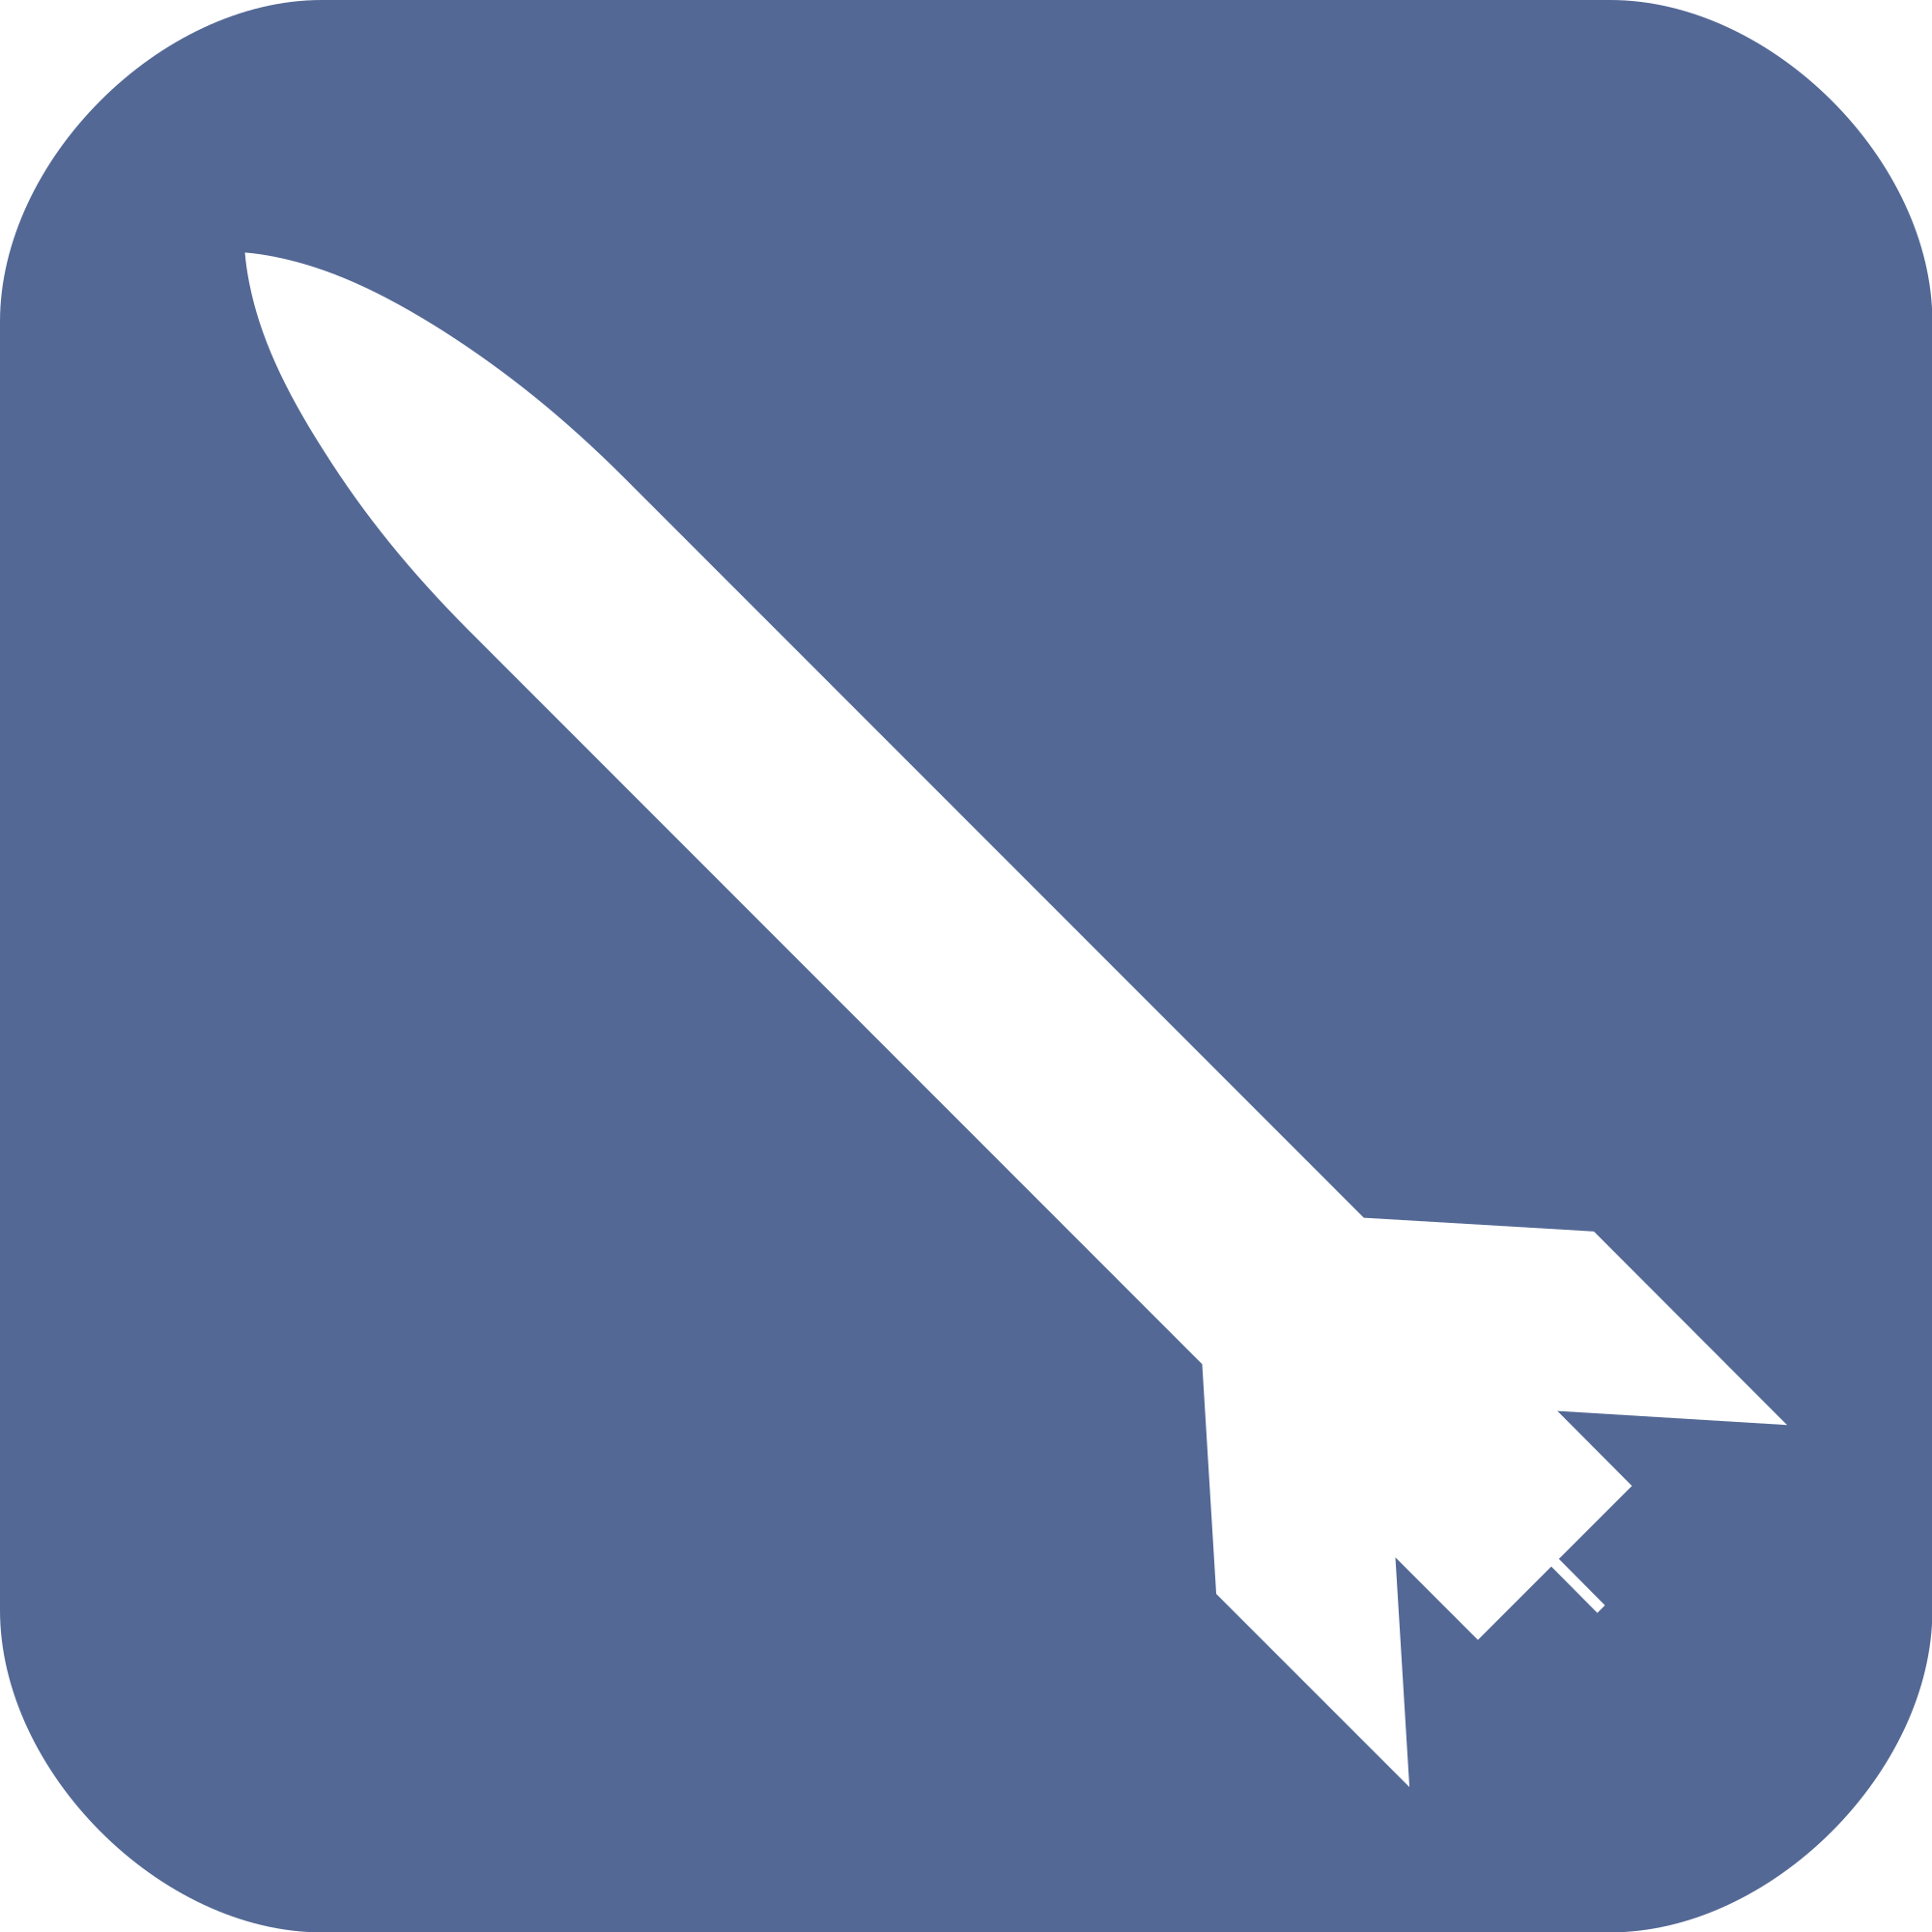 Clipart rocket generic. File icon negative svg